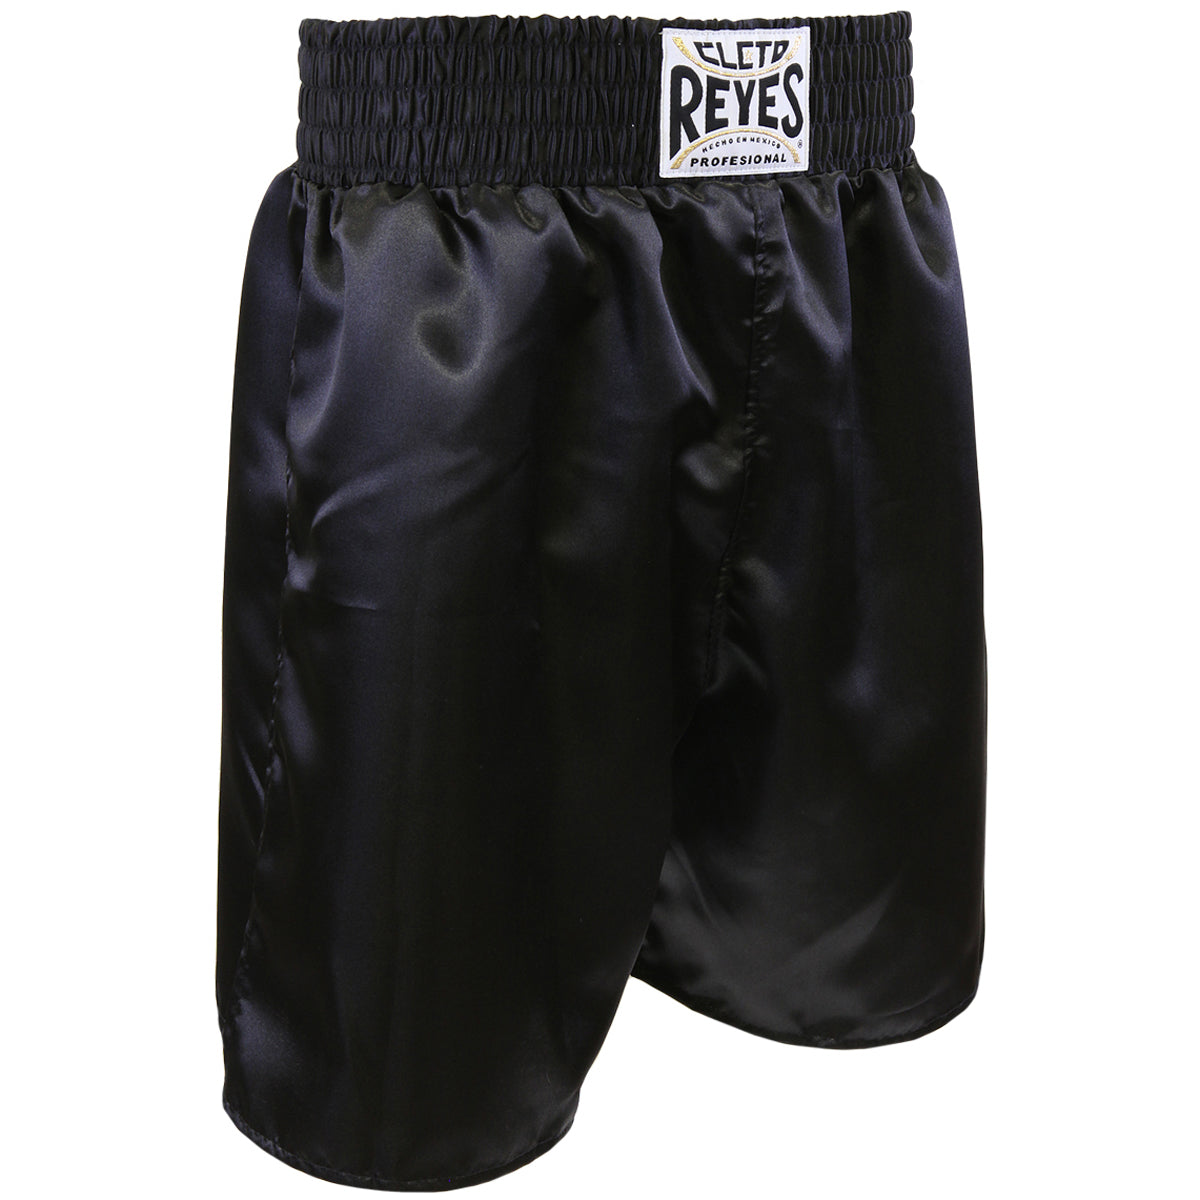 Cleto Reyes Satin Classic Boxing Trunks - Large (40") - Black Cleto Reyes